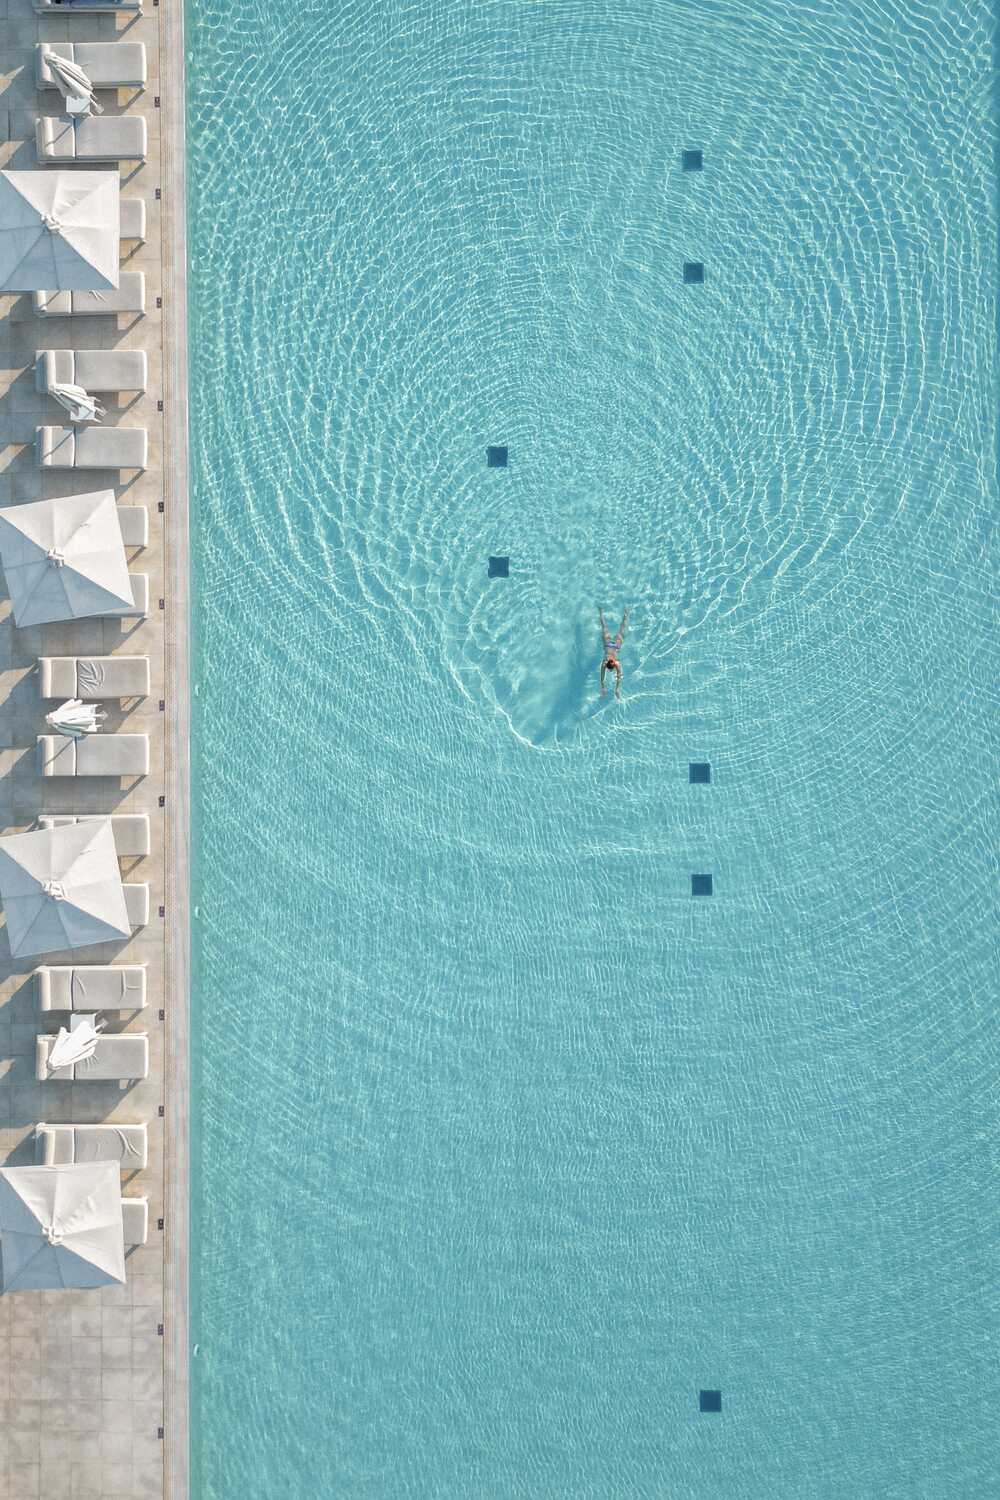 Infinity Pool at Lindos Grand Resort